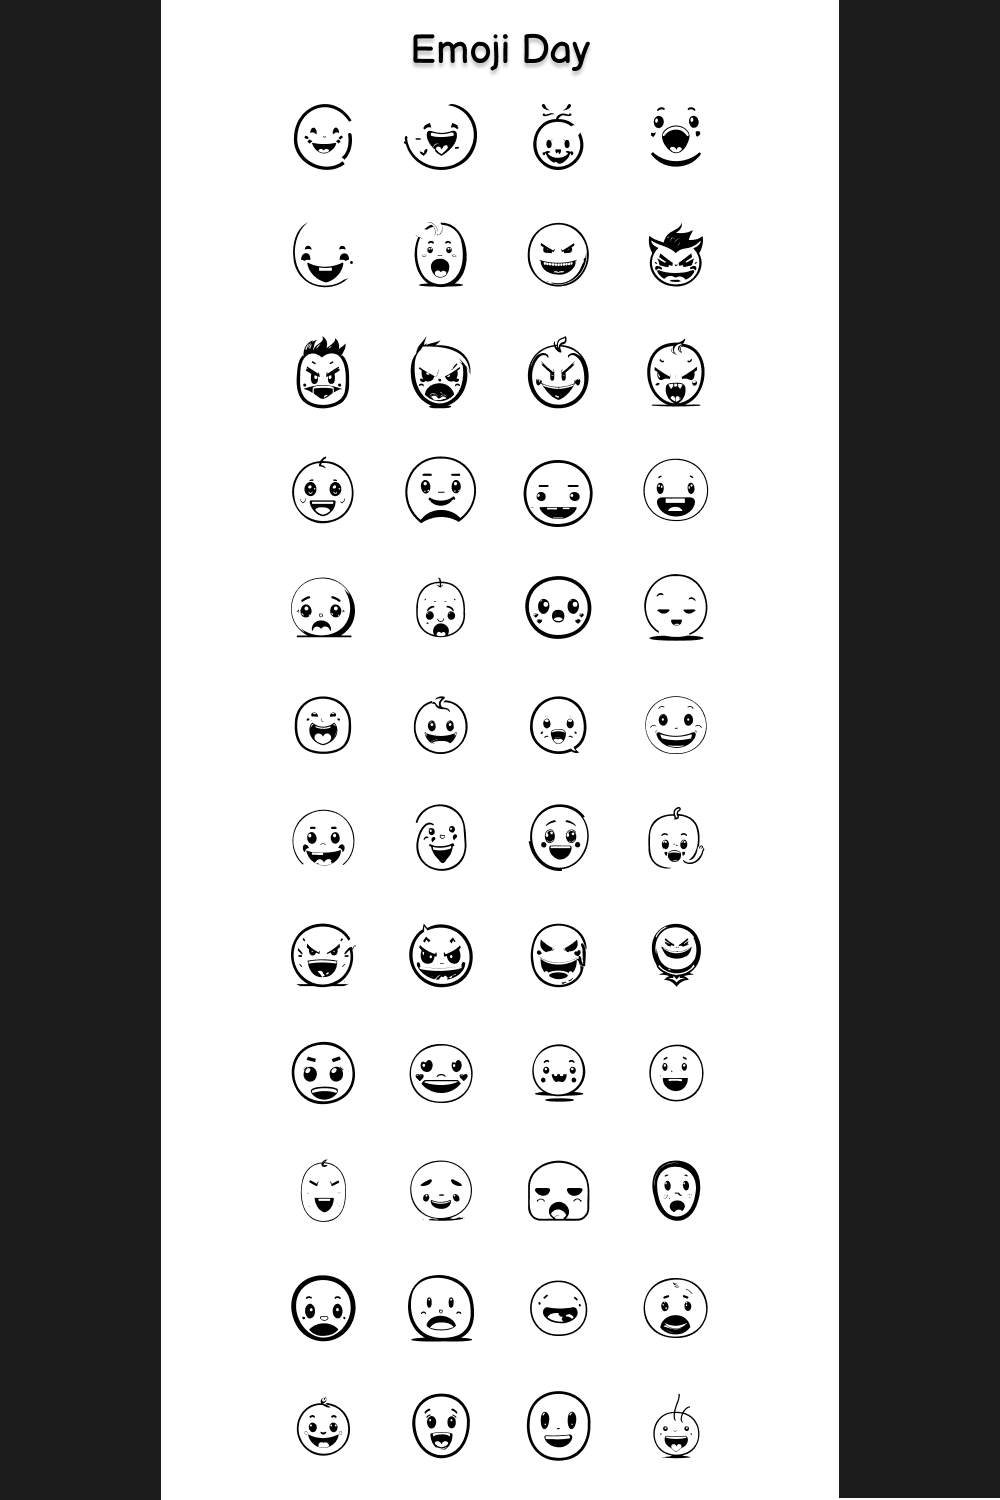 Emoji Day Element Draw Black pinterest preview image.